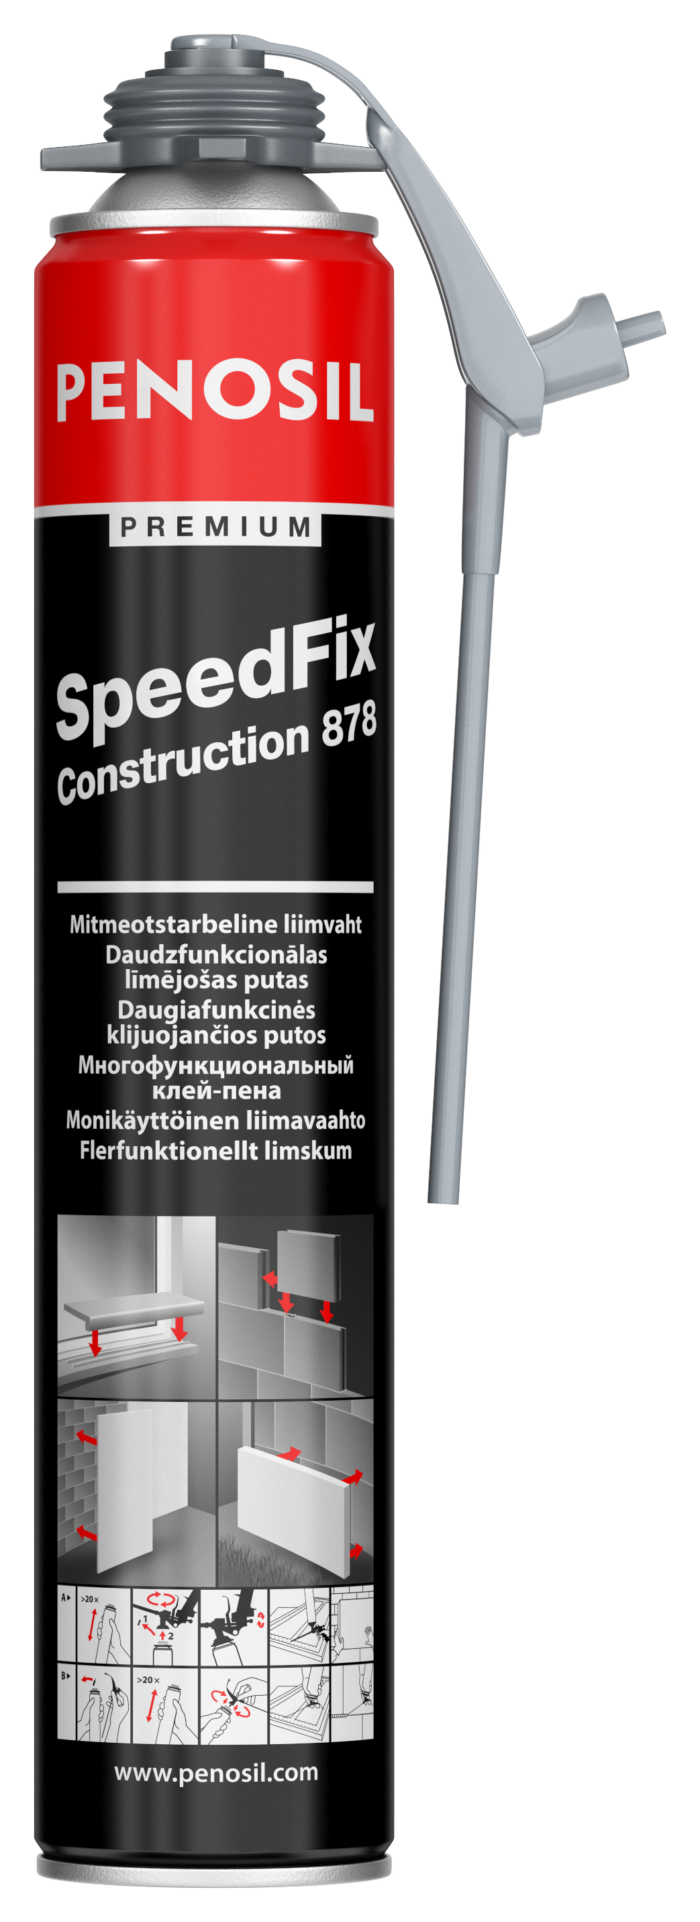 Penosil Premium SpeedFix Construction 878 універсальна клей-піна